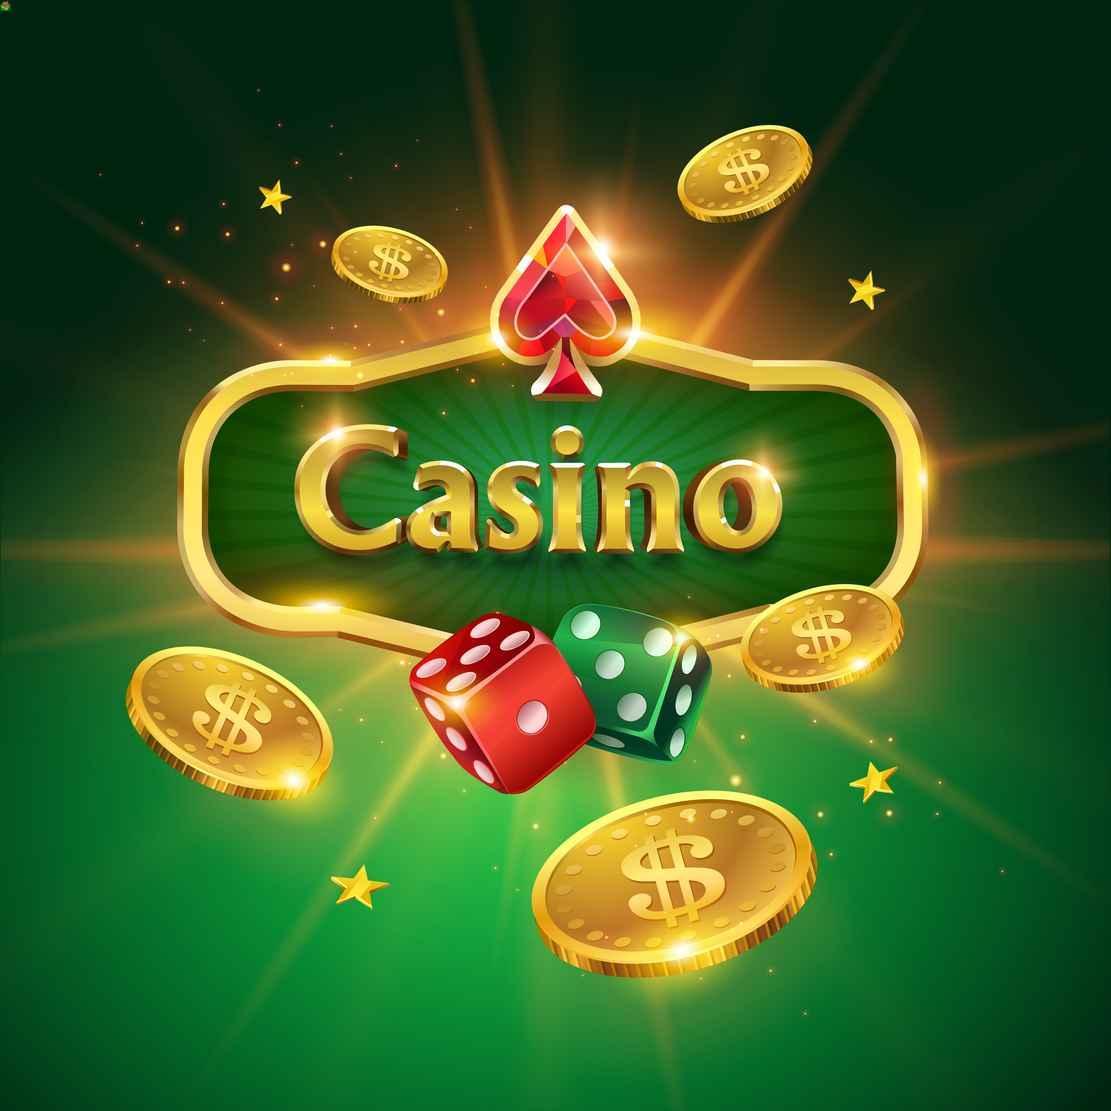 Sweepstakes and Social No Deposit Casino Bonuses